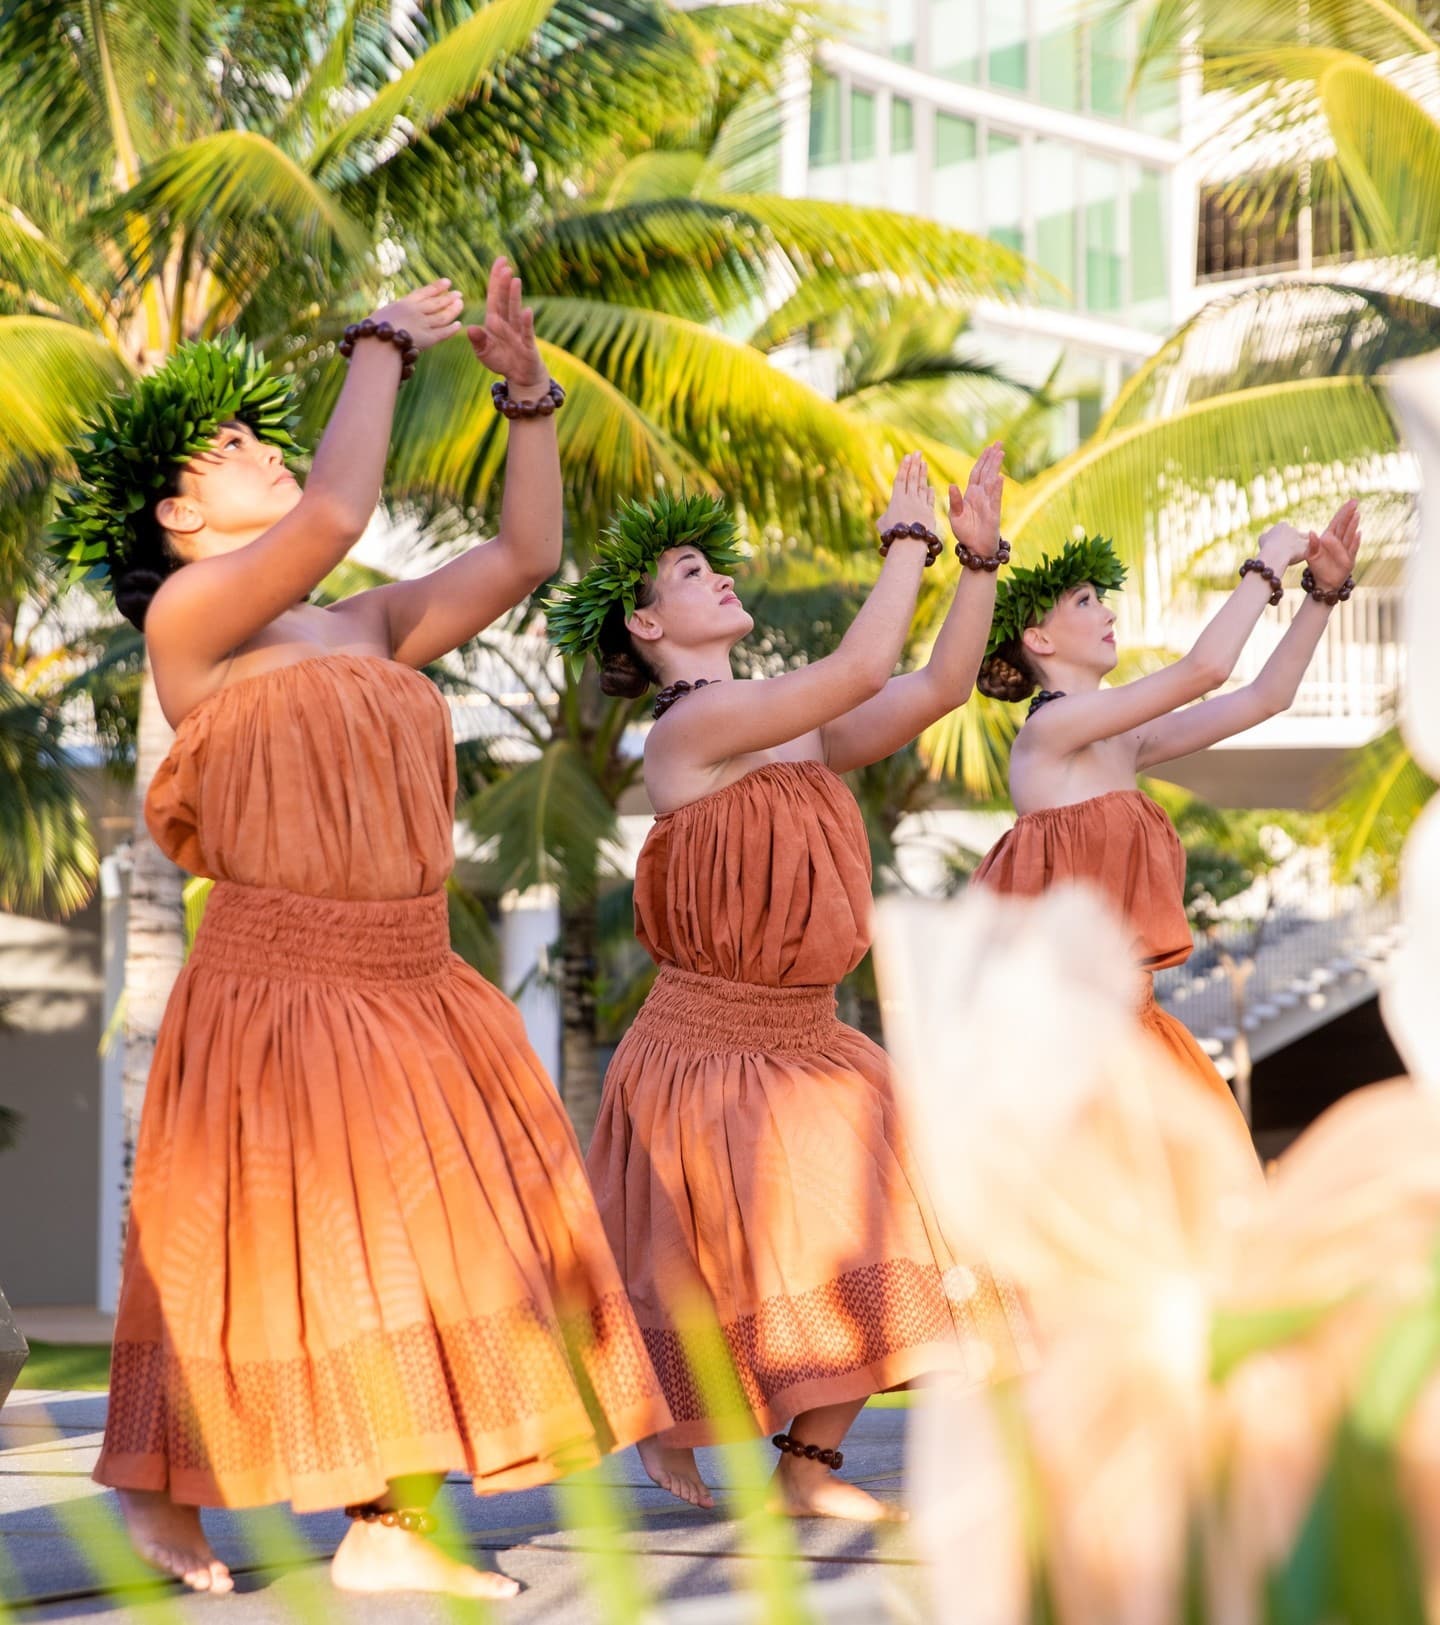 Mark your calendar for the final Kona Nui Nights of the year on Wednesday, October 4 from 6pm - 8pm. Enjoy an evening of live Hawaiian music by Nāpua Greig and a celebration of hula and storytelling by Hālau Nā Lei Kaumaka O Uka at Victoria Ward Park.